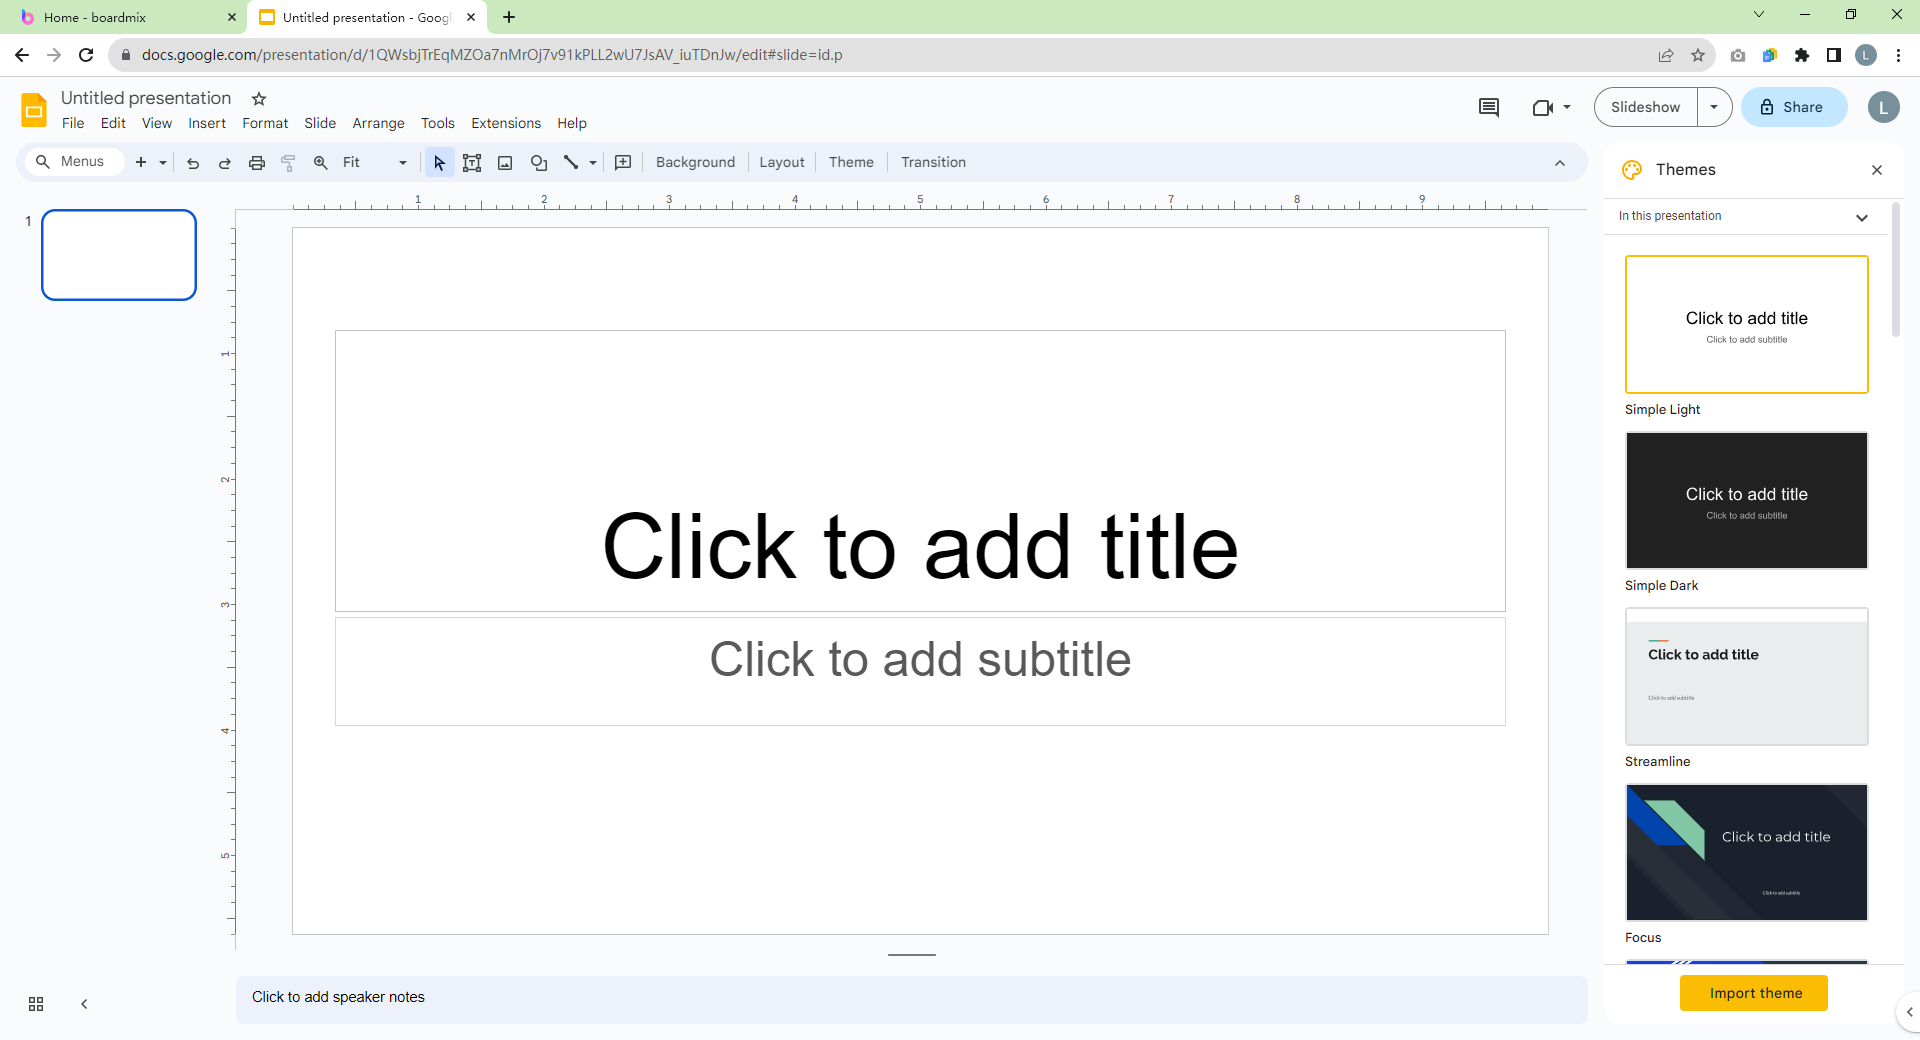 1.Open Google Slides and start a new presentation.